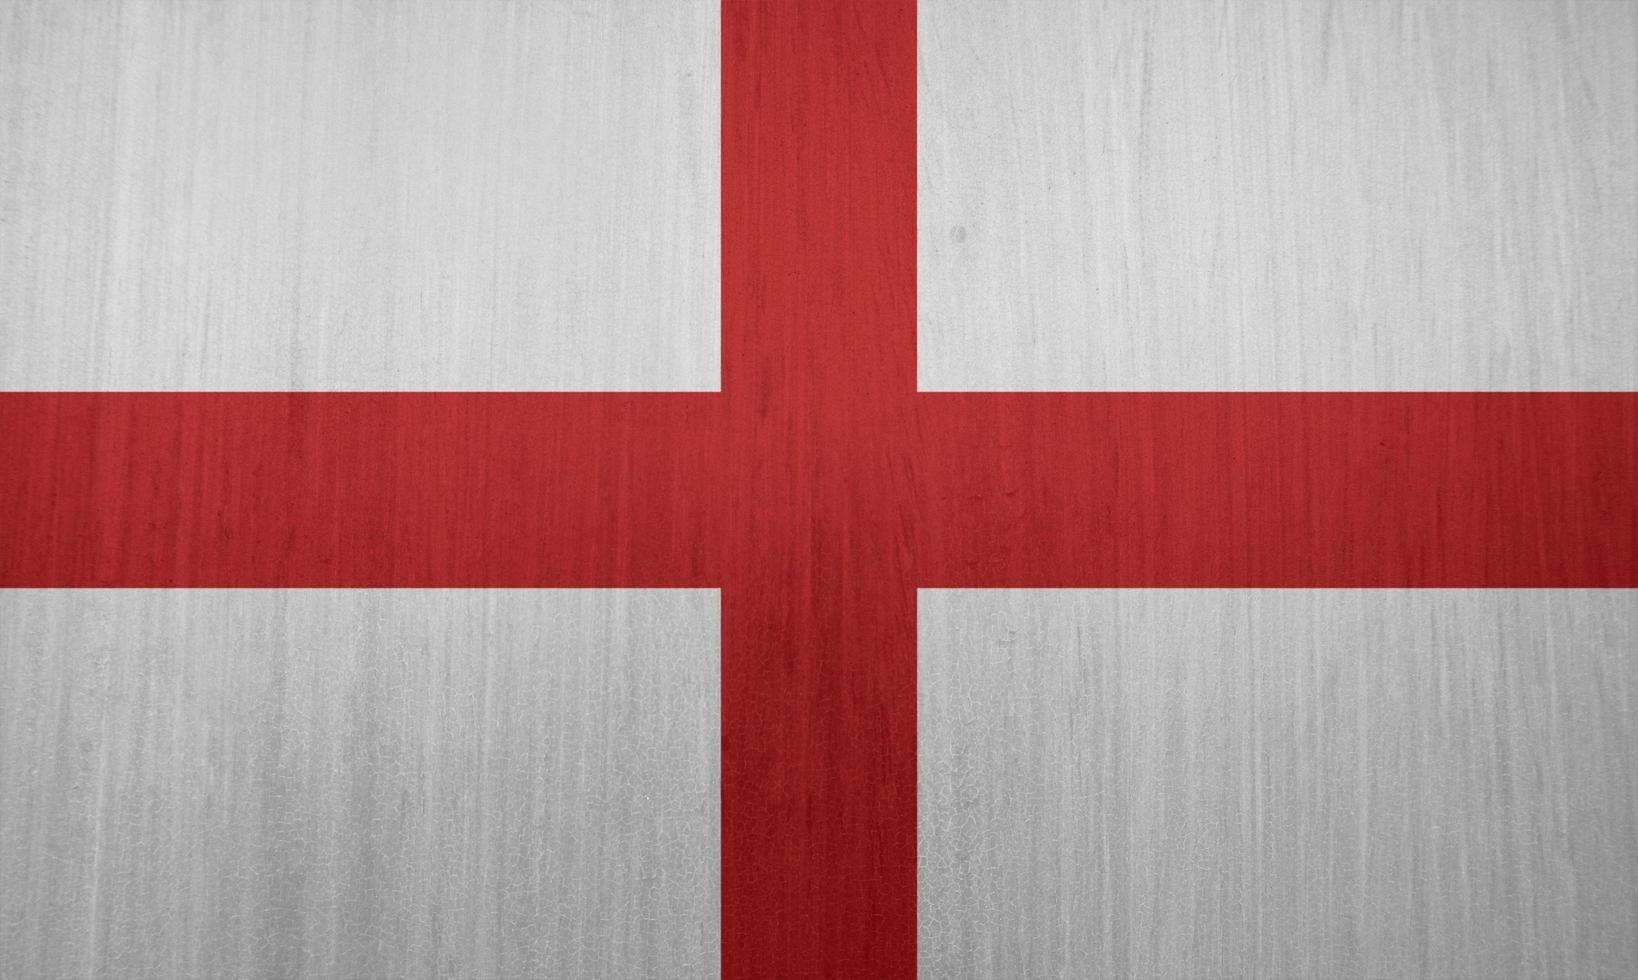 british flag texture as background photo